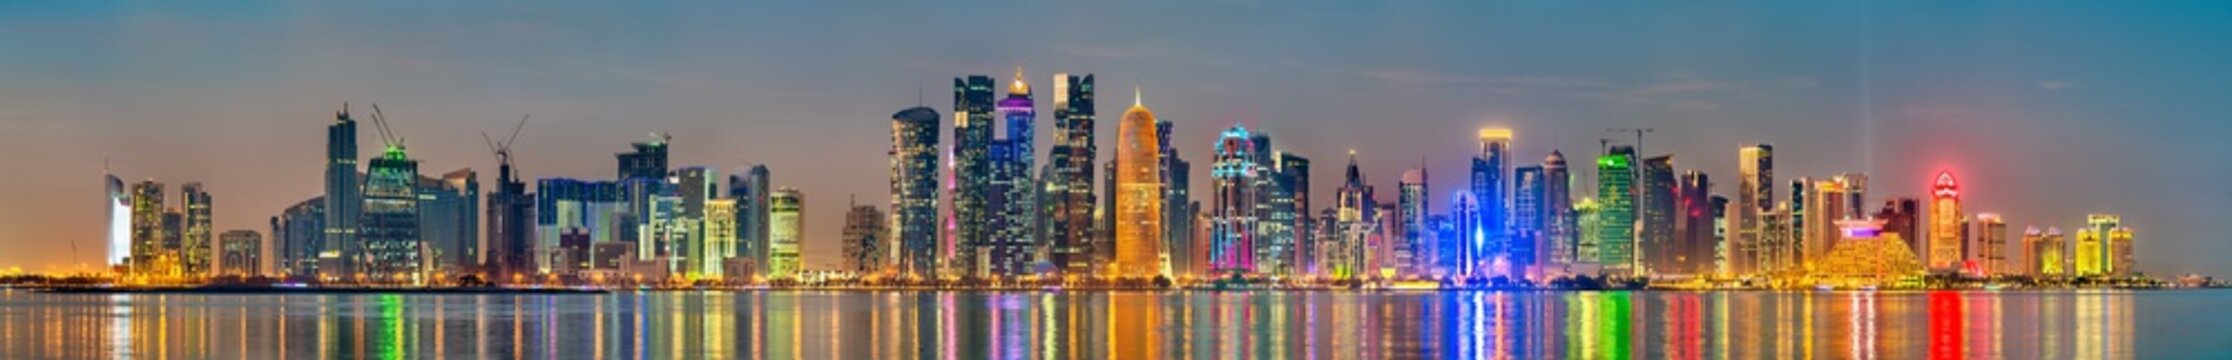 Skyline of Doha at sunset. The capital of Qatar